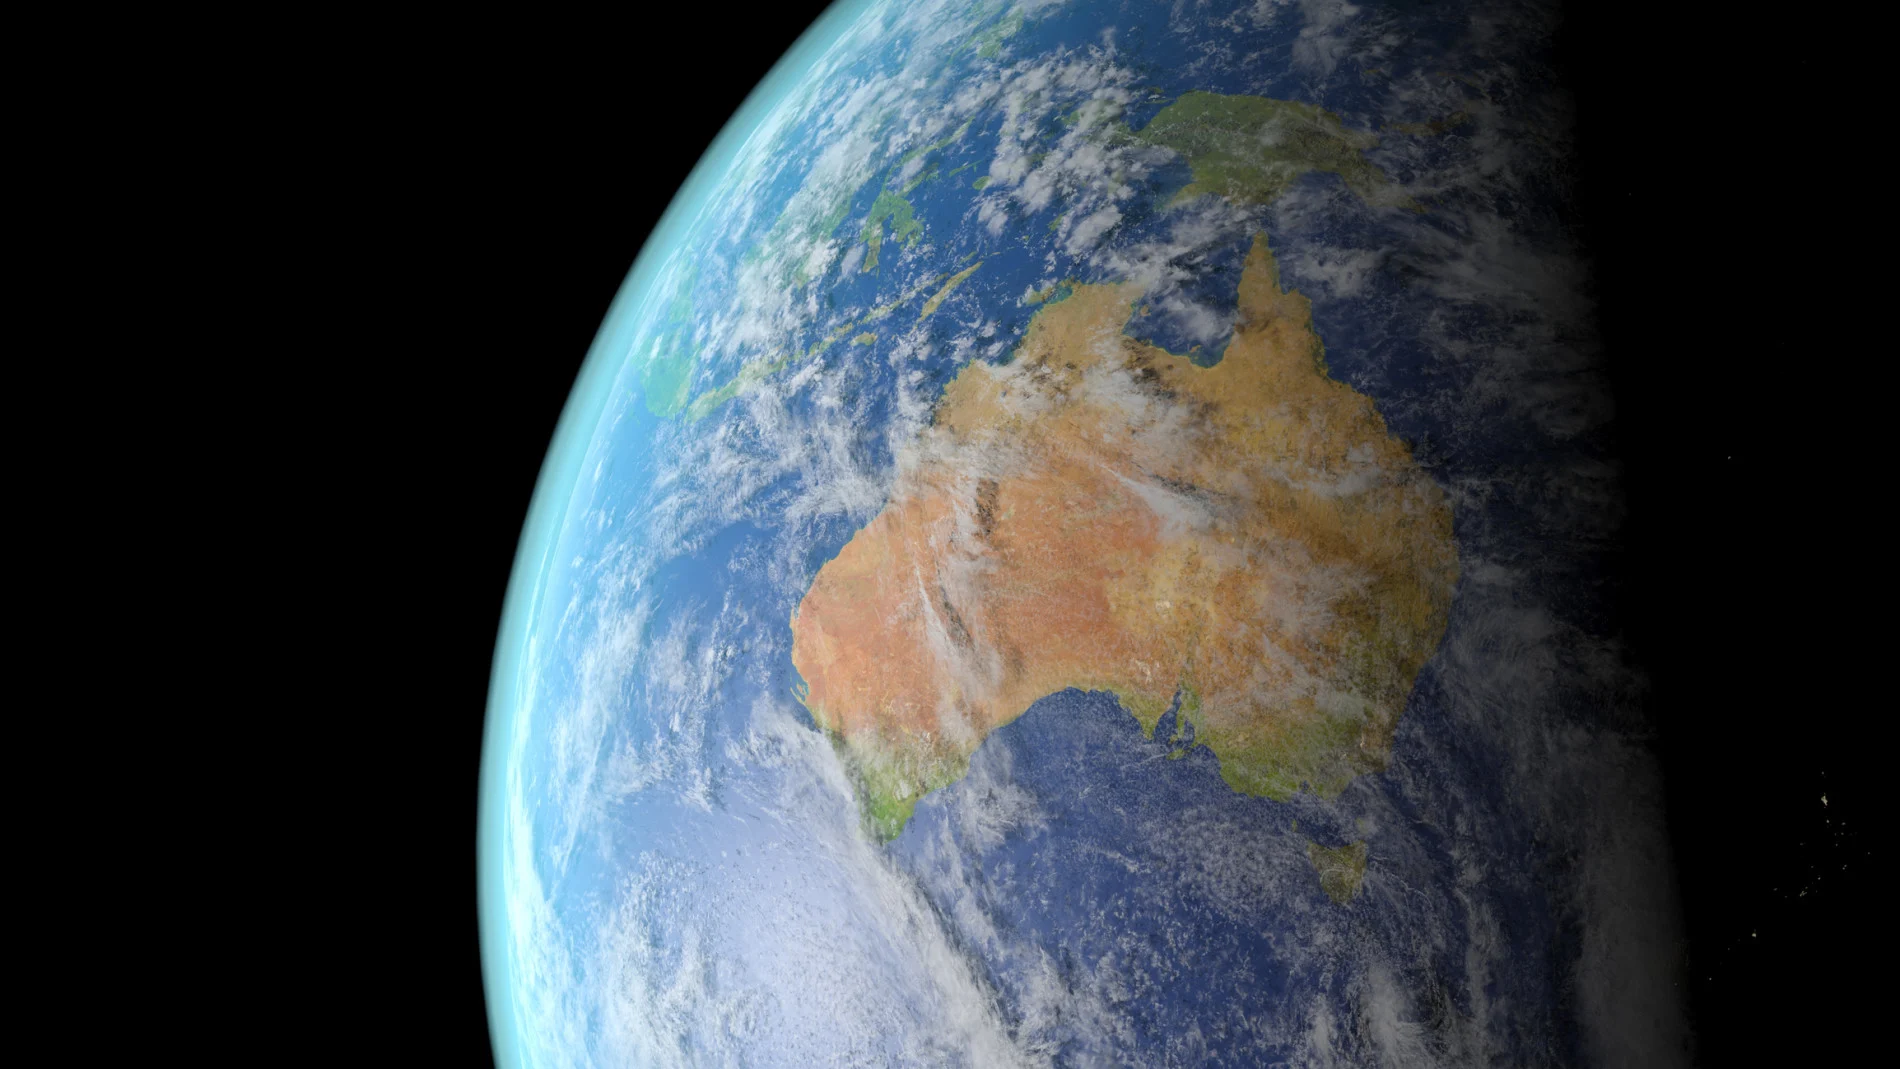 Australia's "Black Summer" fires damaged the ozone layer, study reveals